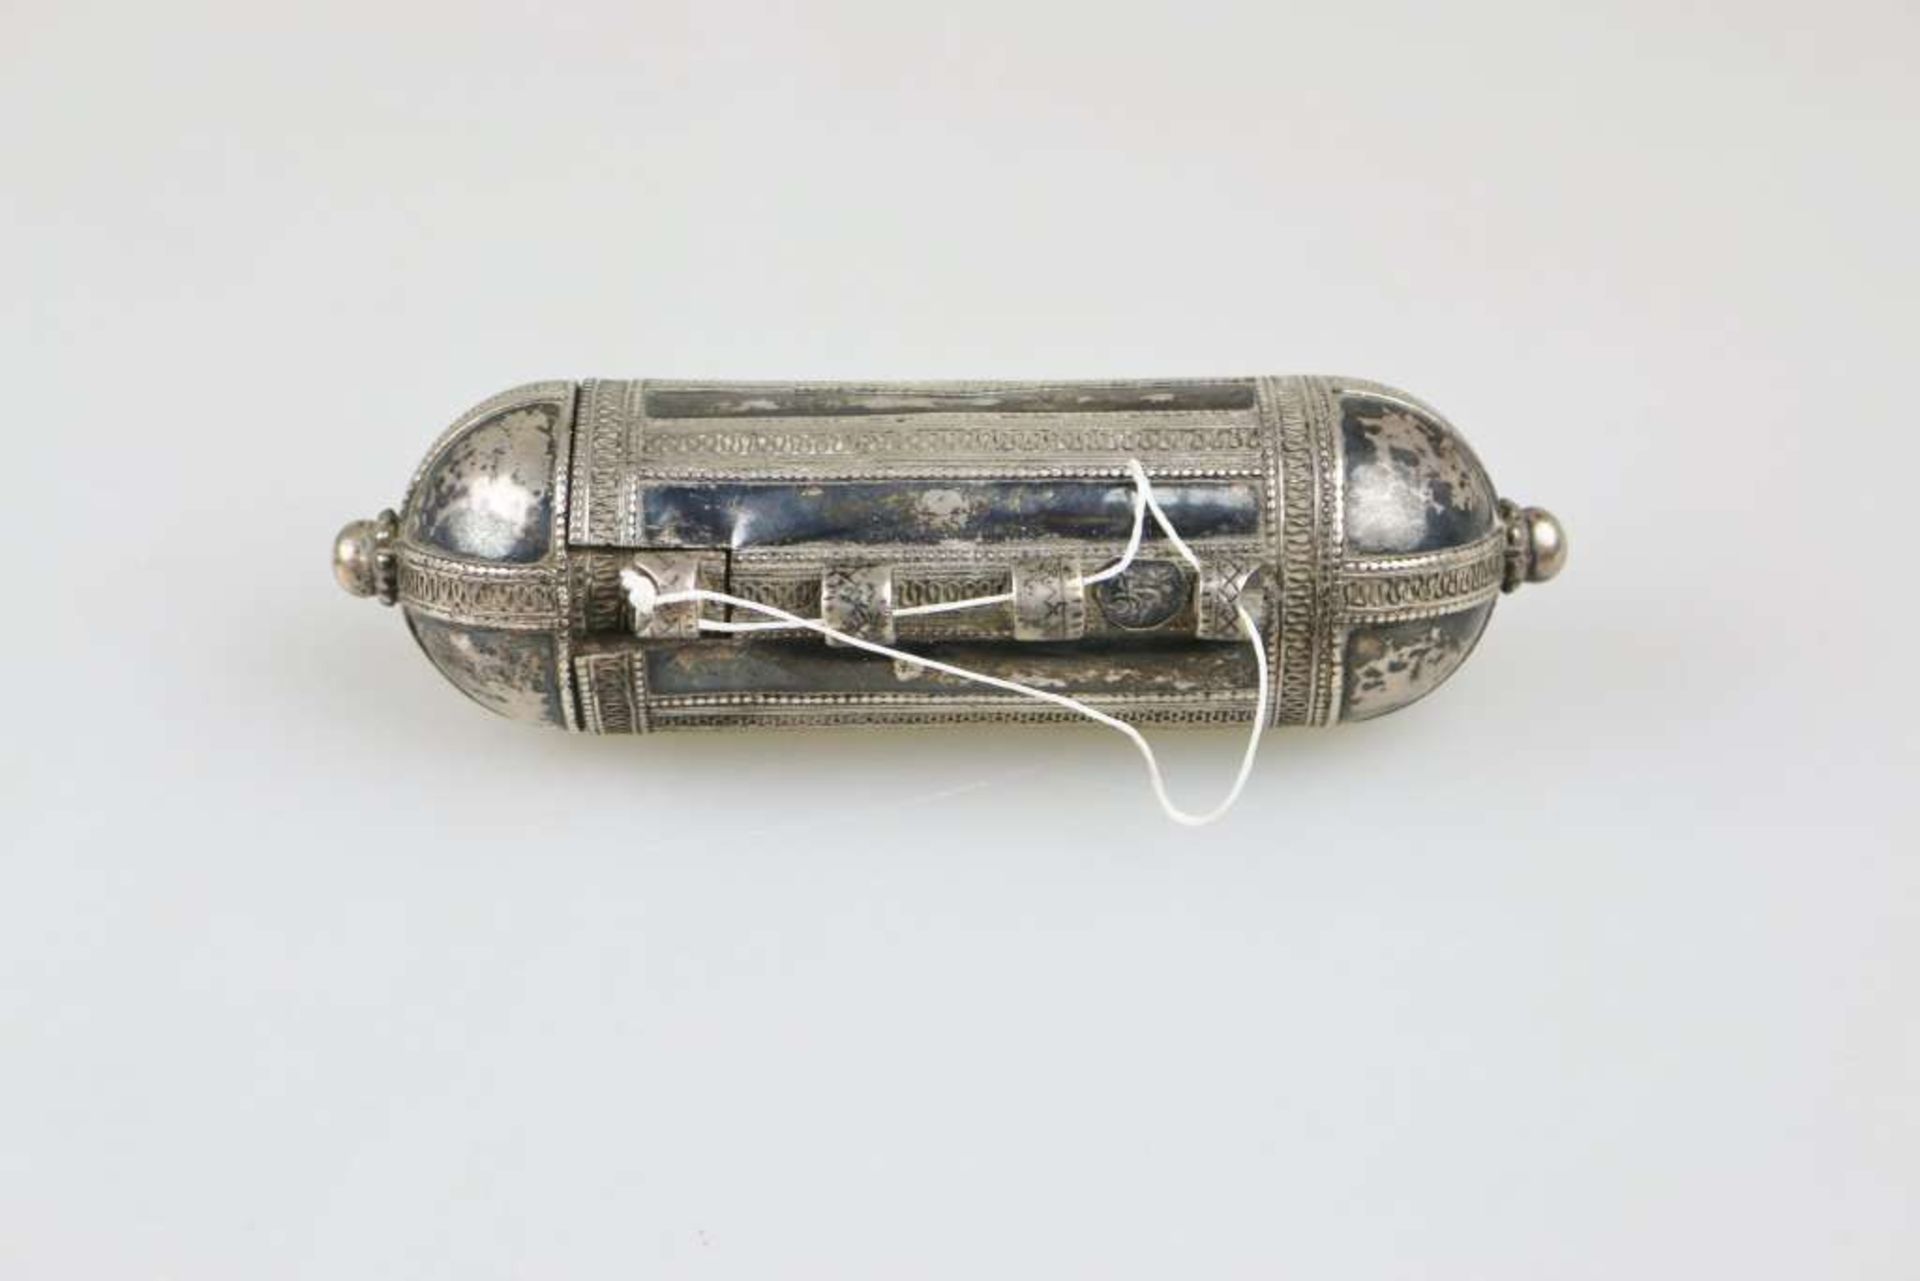 Amulettbehälter, wohl Jemen 19./20. Jh., Silber, zylindrischer Korpus, verziert, L.: ca. 17 cm,